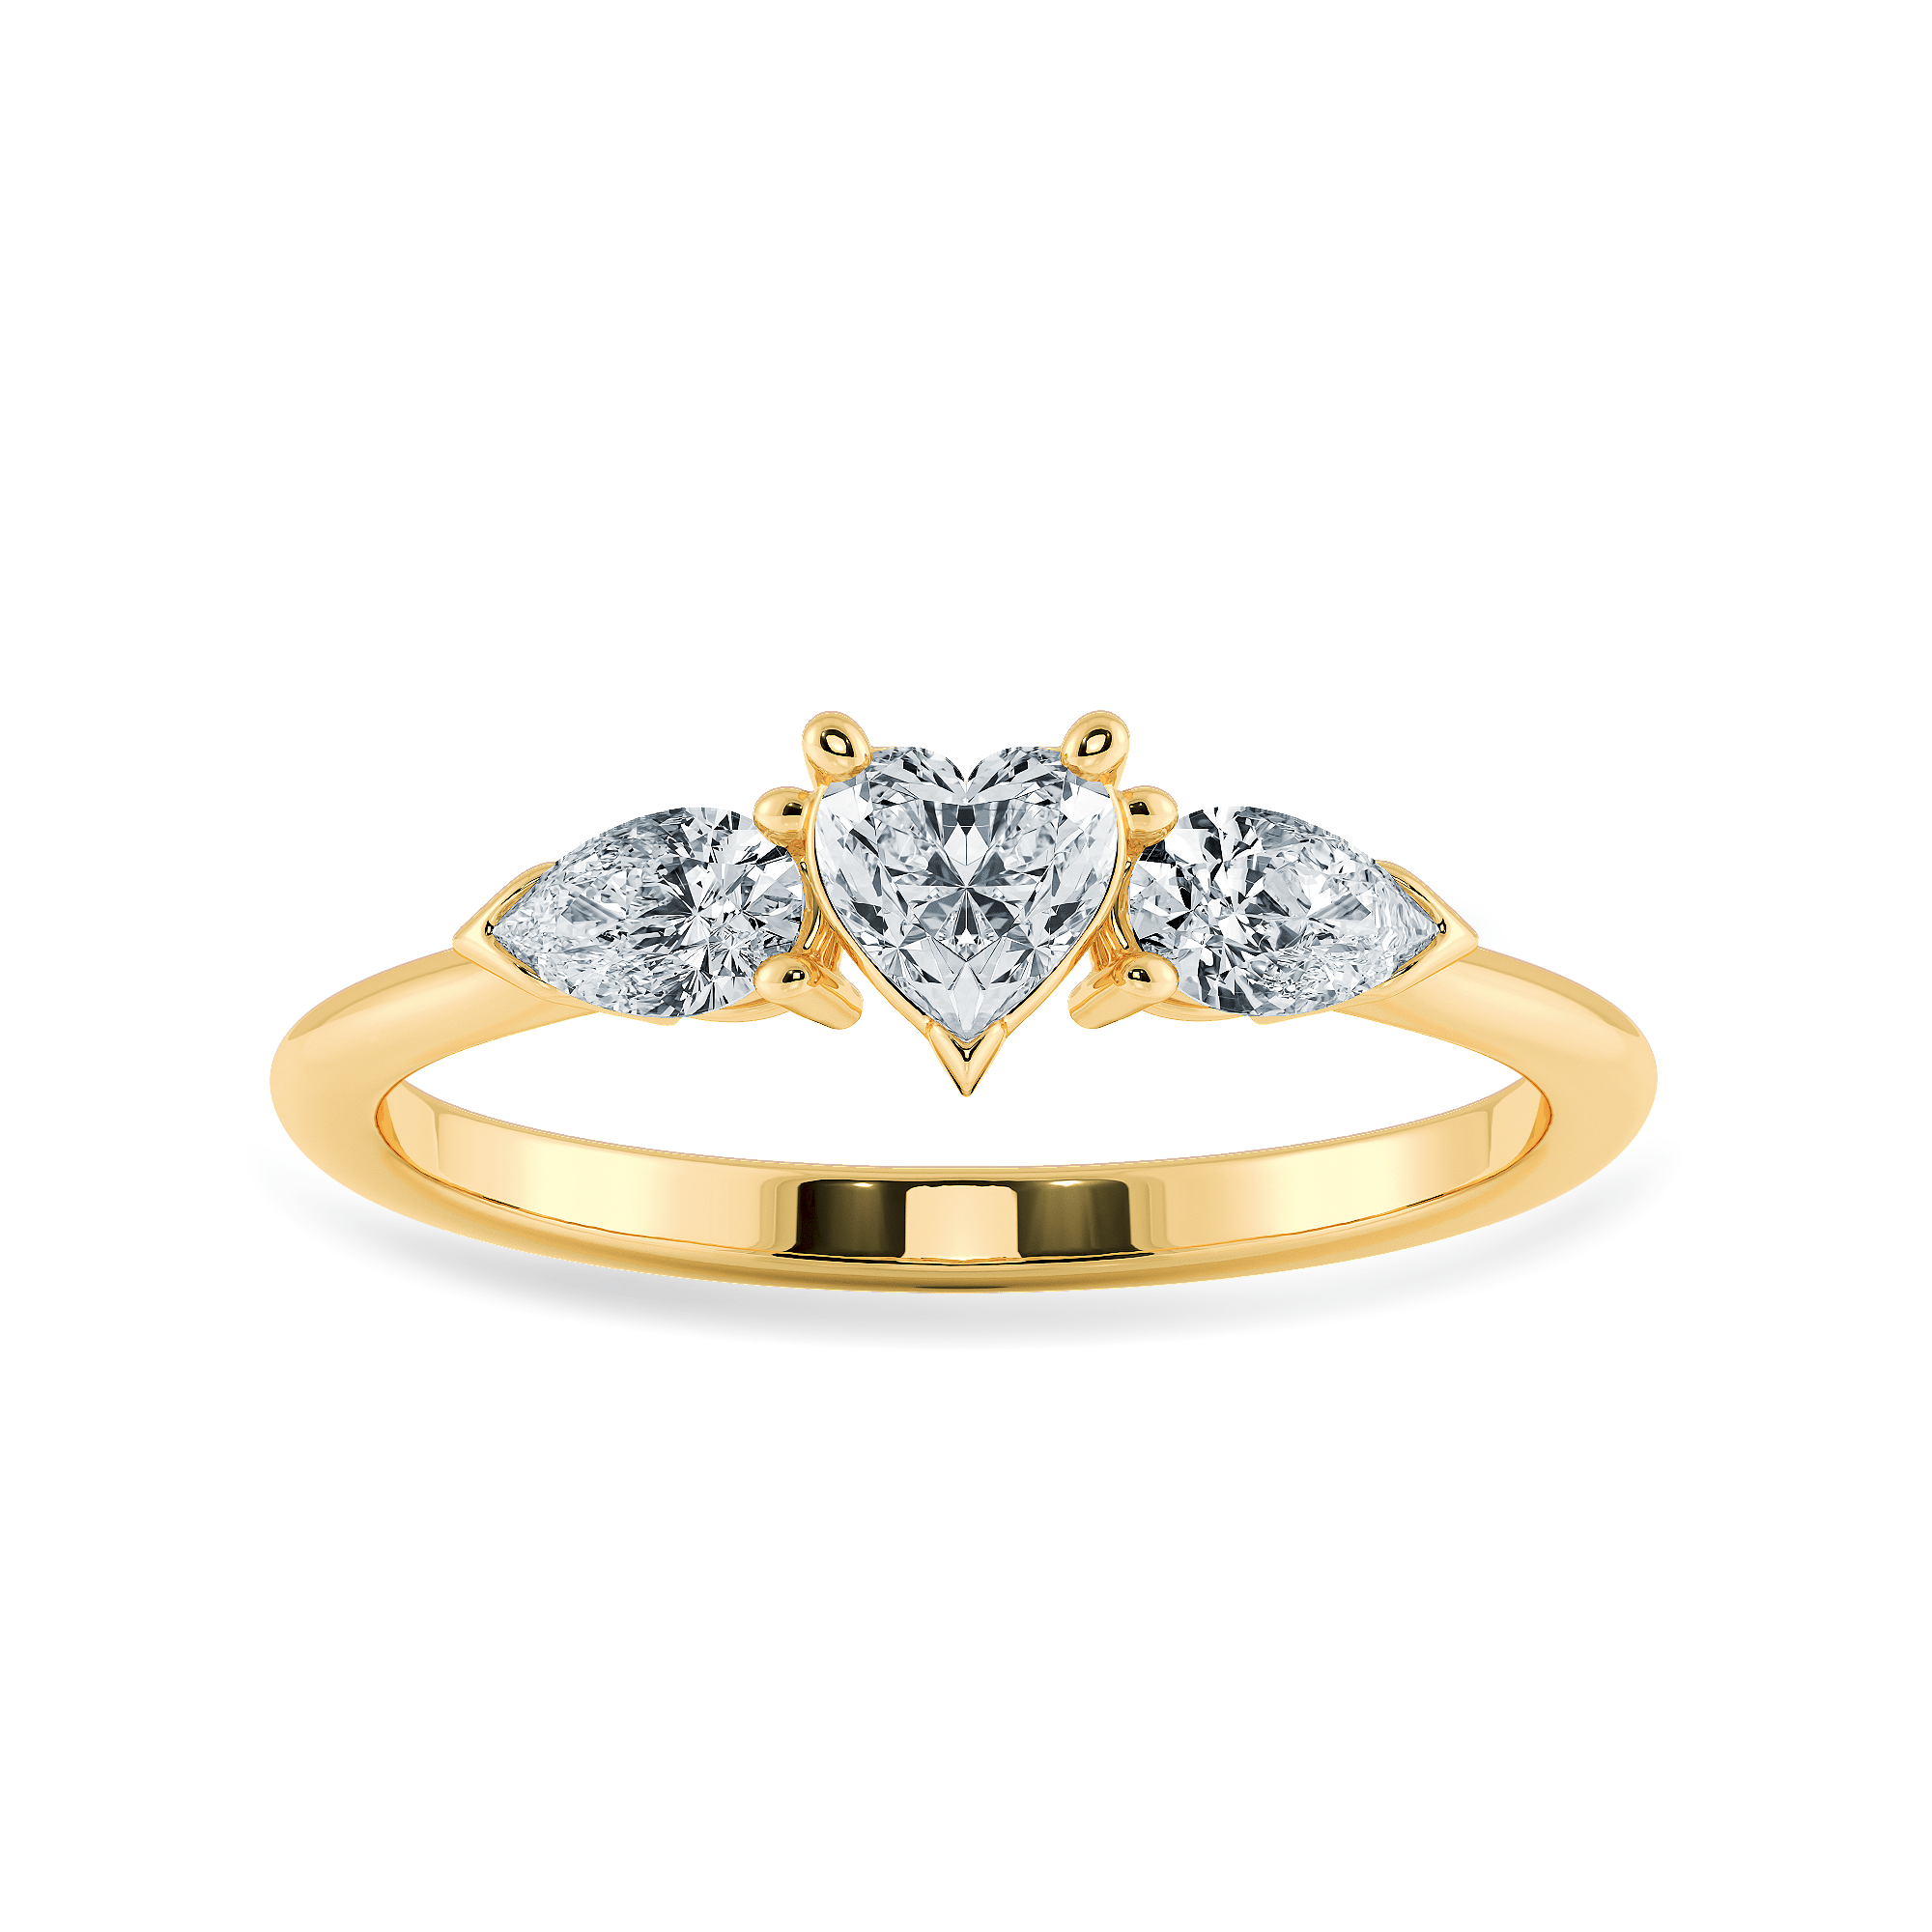 3/4 Carat Heart Shape Diamond Solitaire Ring In 14K White Gold